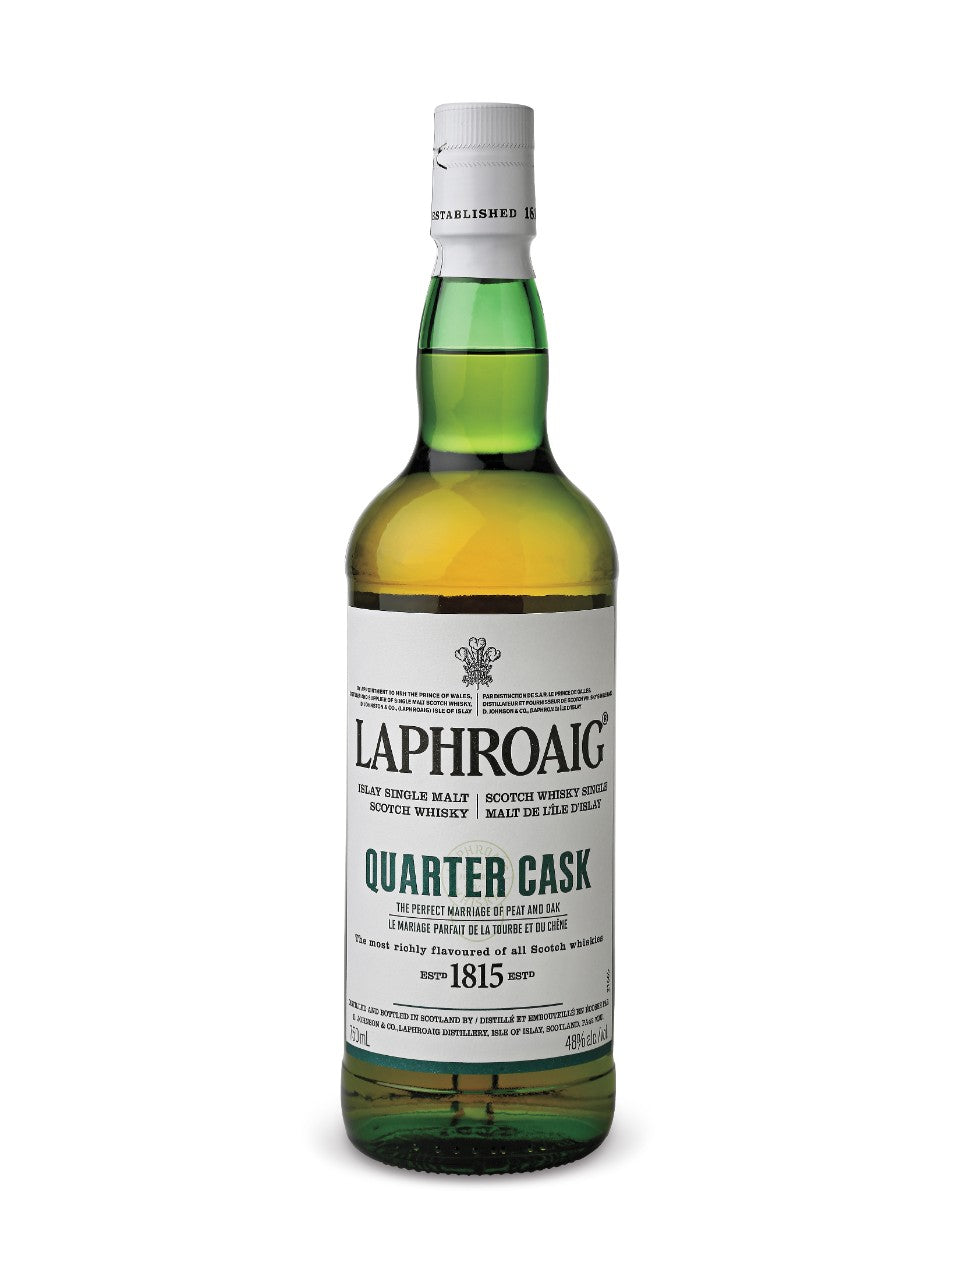 Laphroaig Quarter Cask Islay Single Malt Scotch Whisky 750 ml bottle